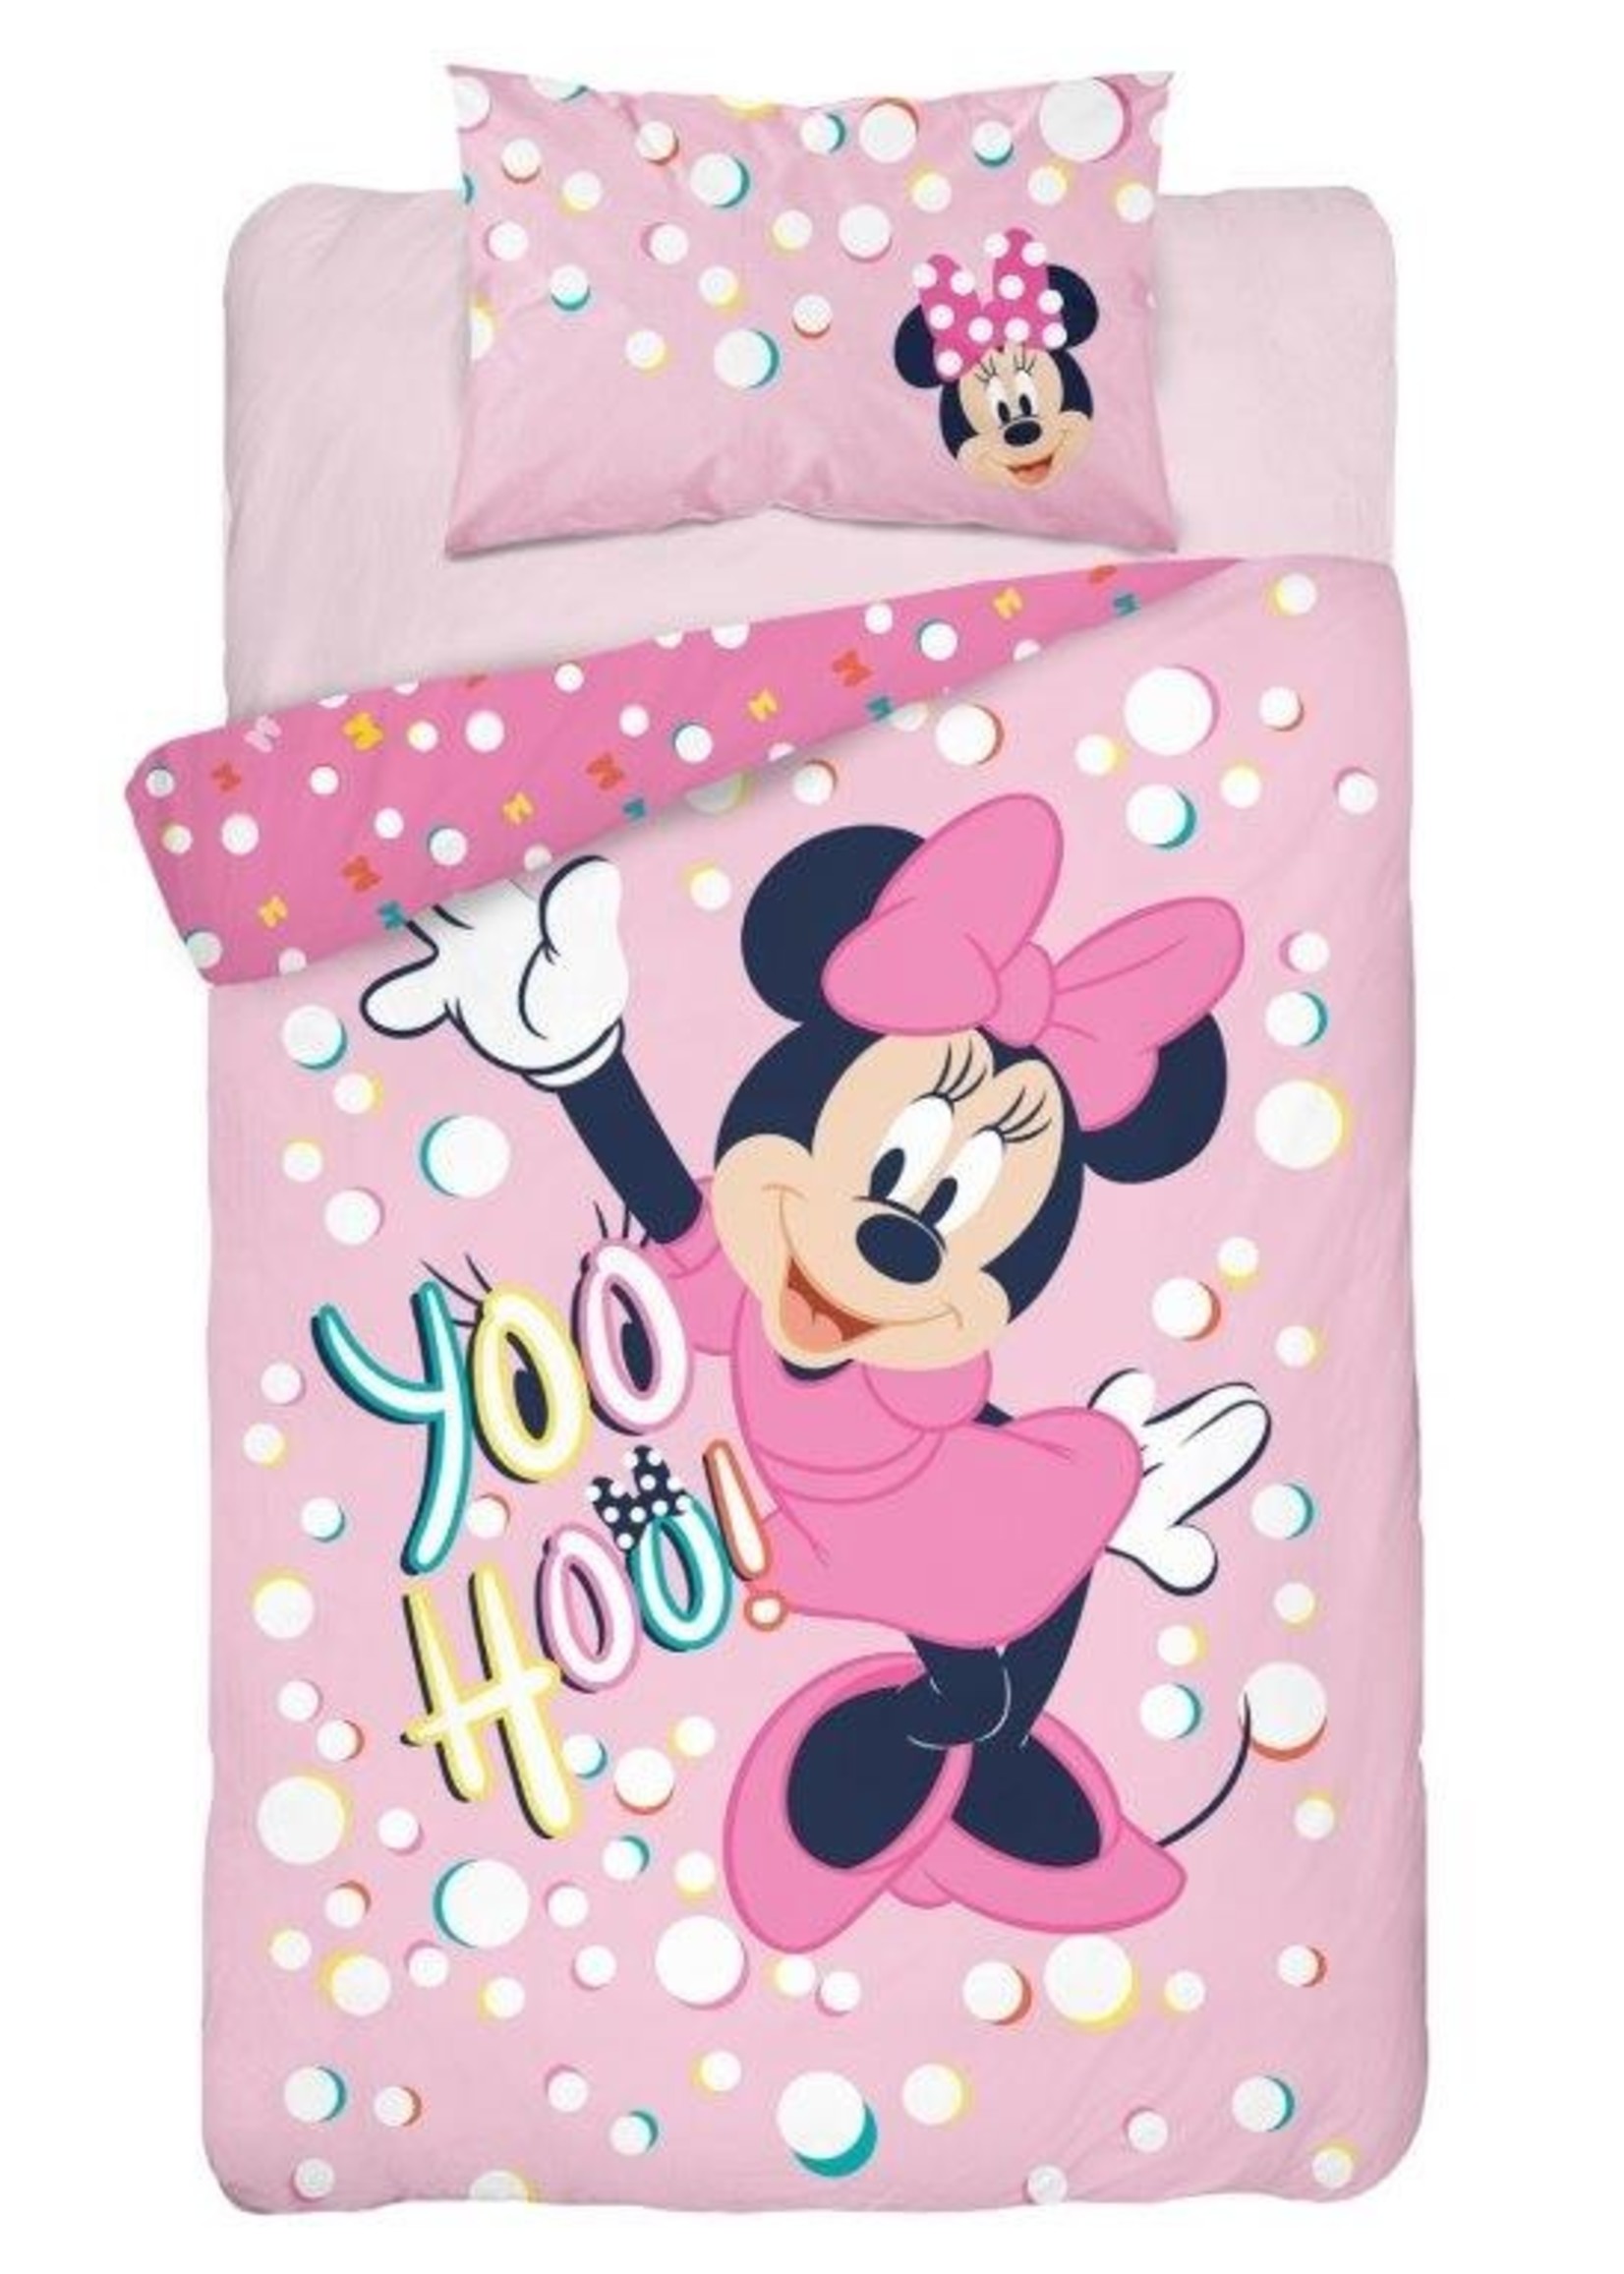 Disney Minnie Mouse  Duvet Cover Set Yoohoo